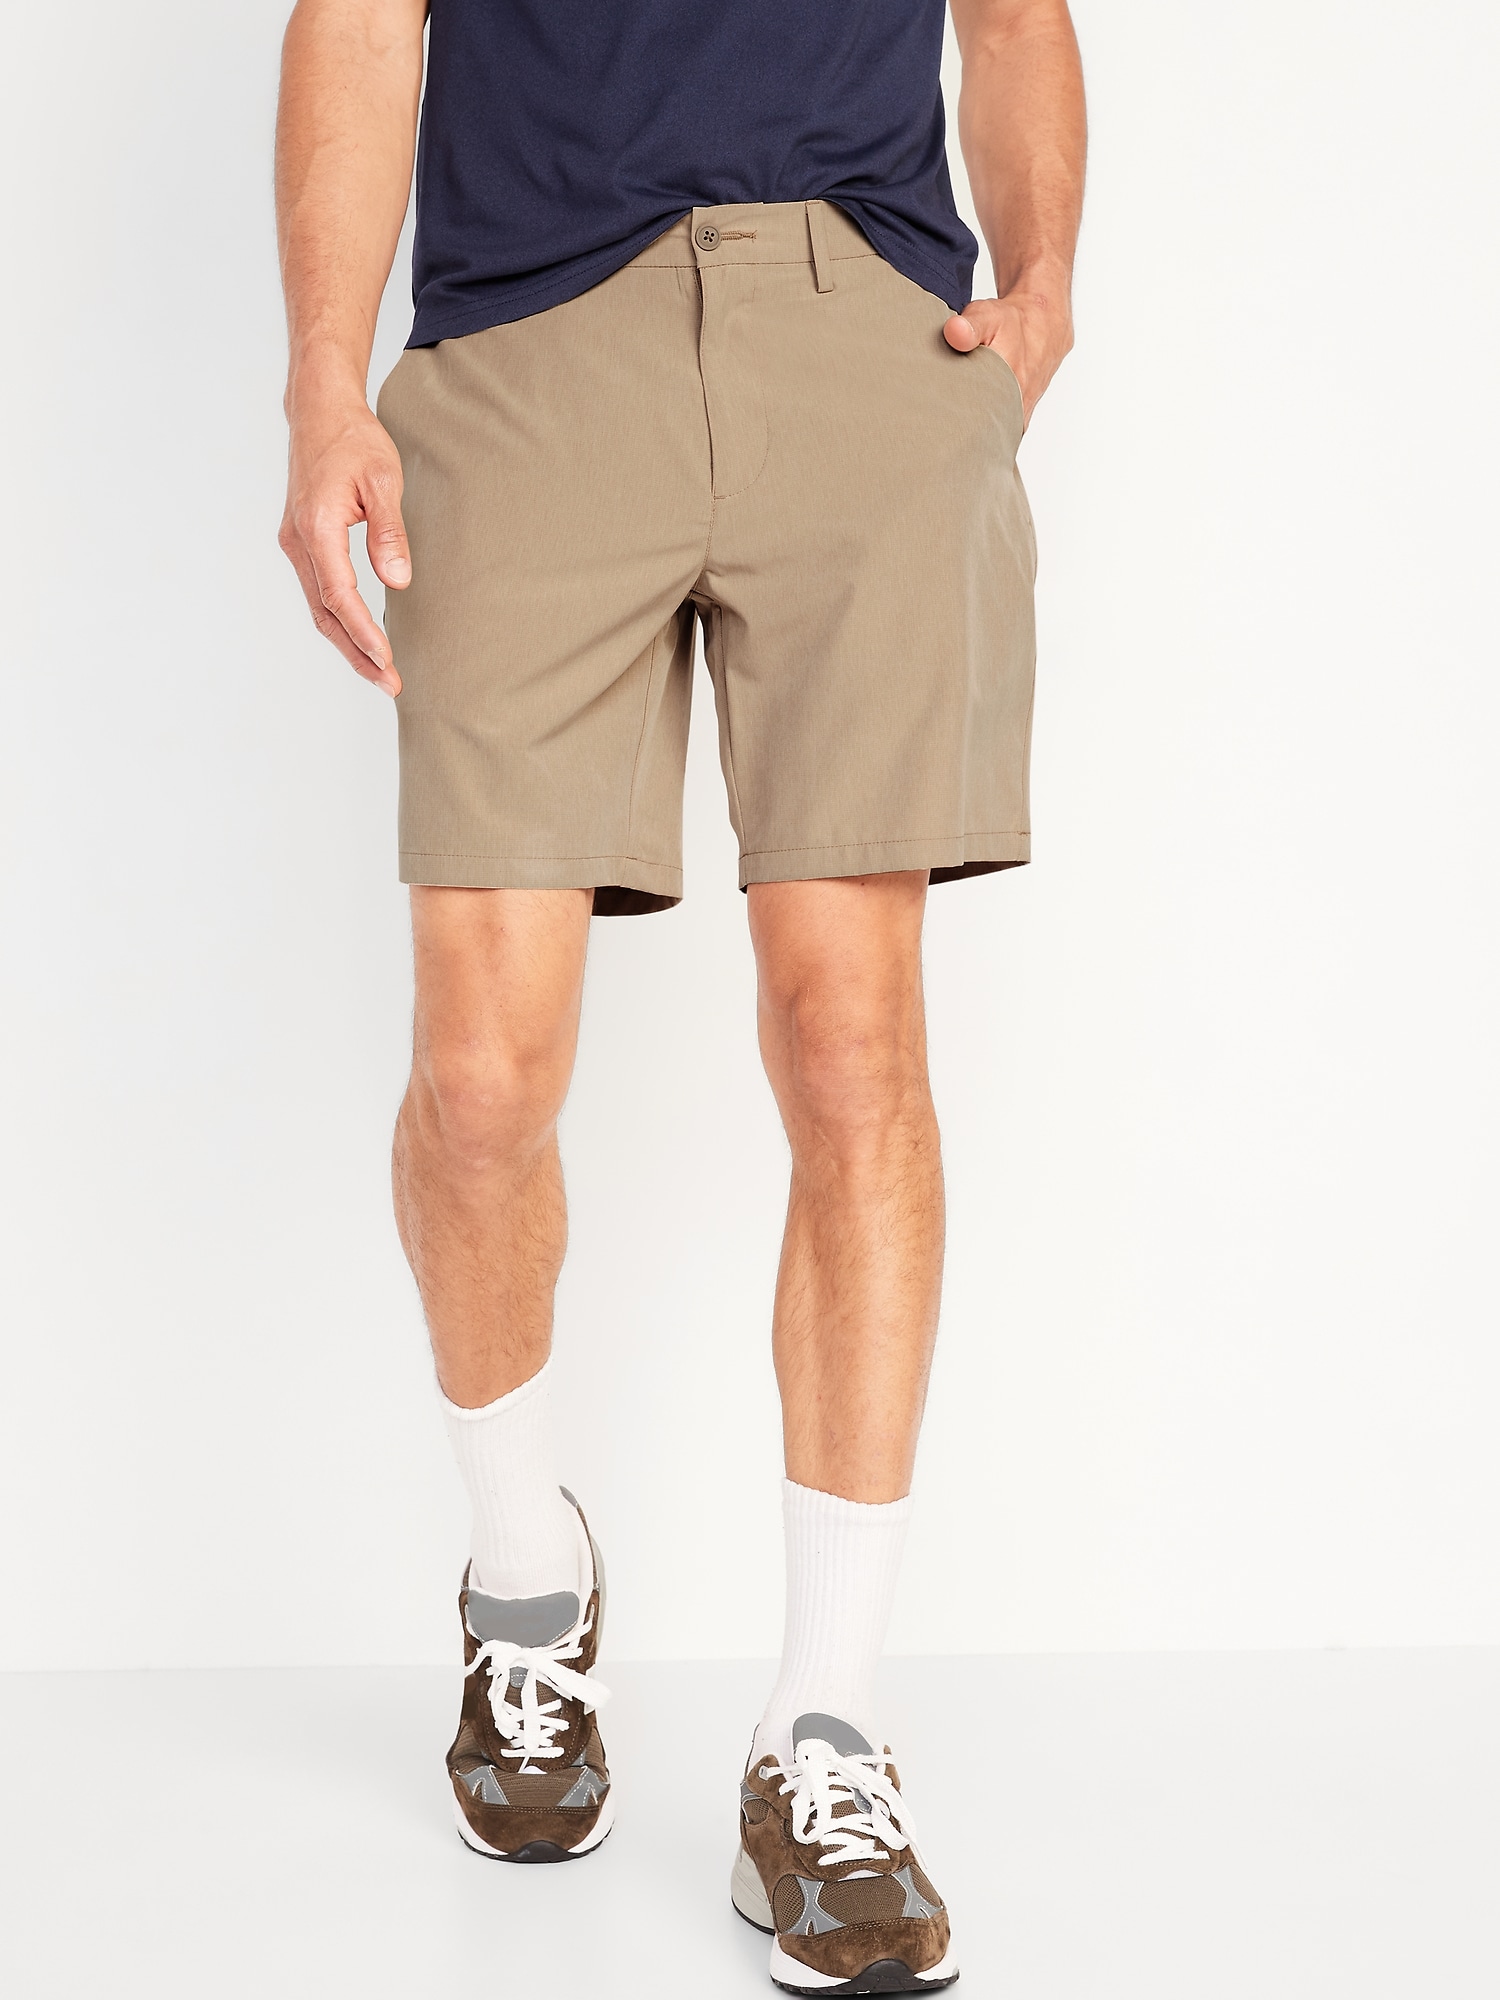 sale shop BALEAF Lightweight Men woven shorts for men in navy navy ...